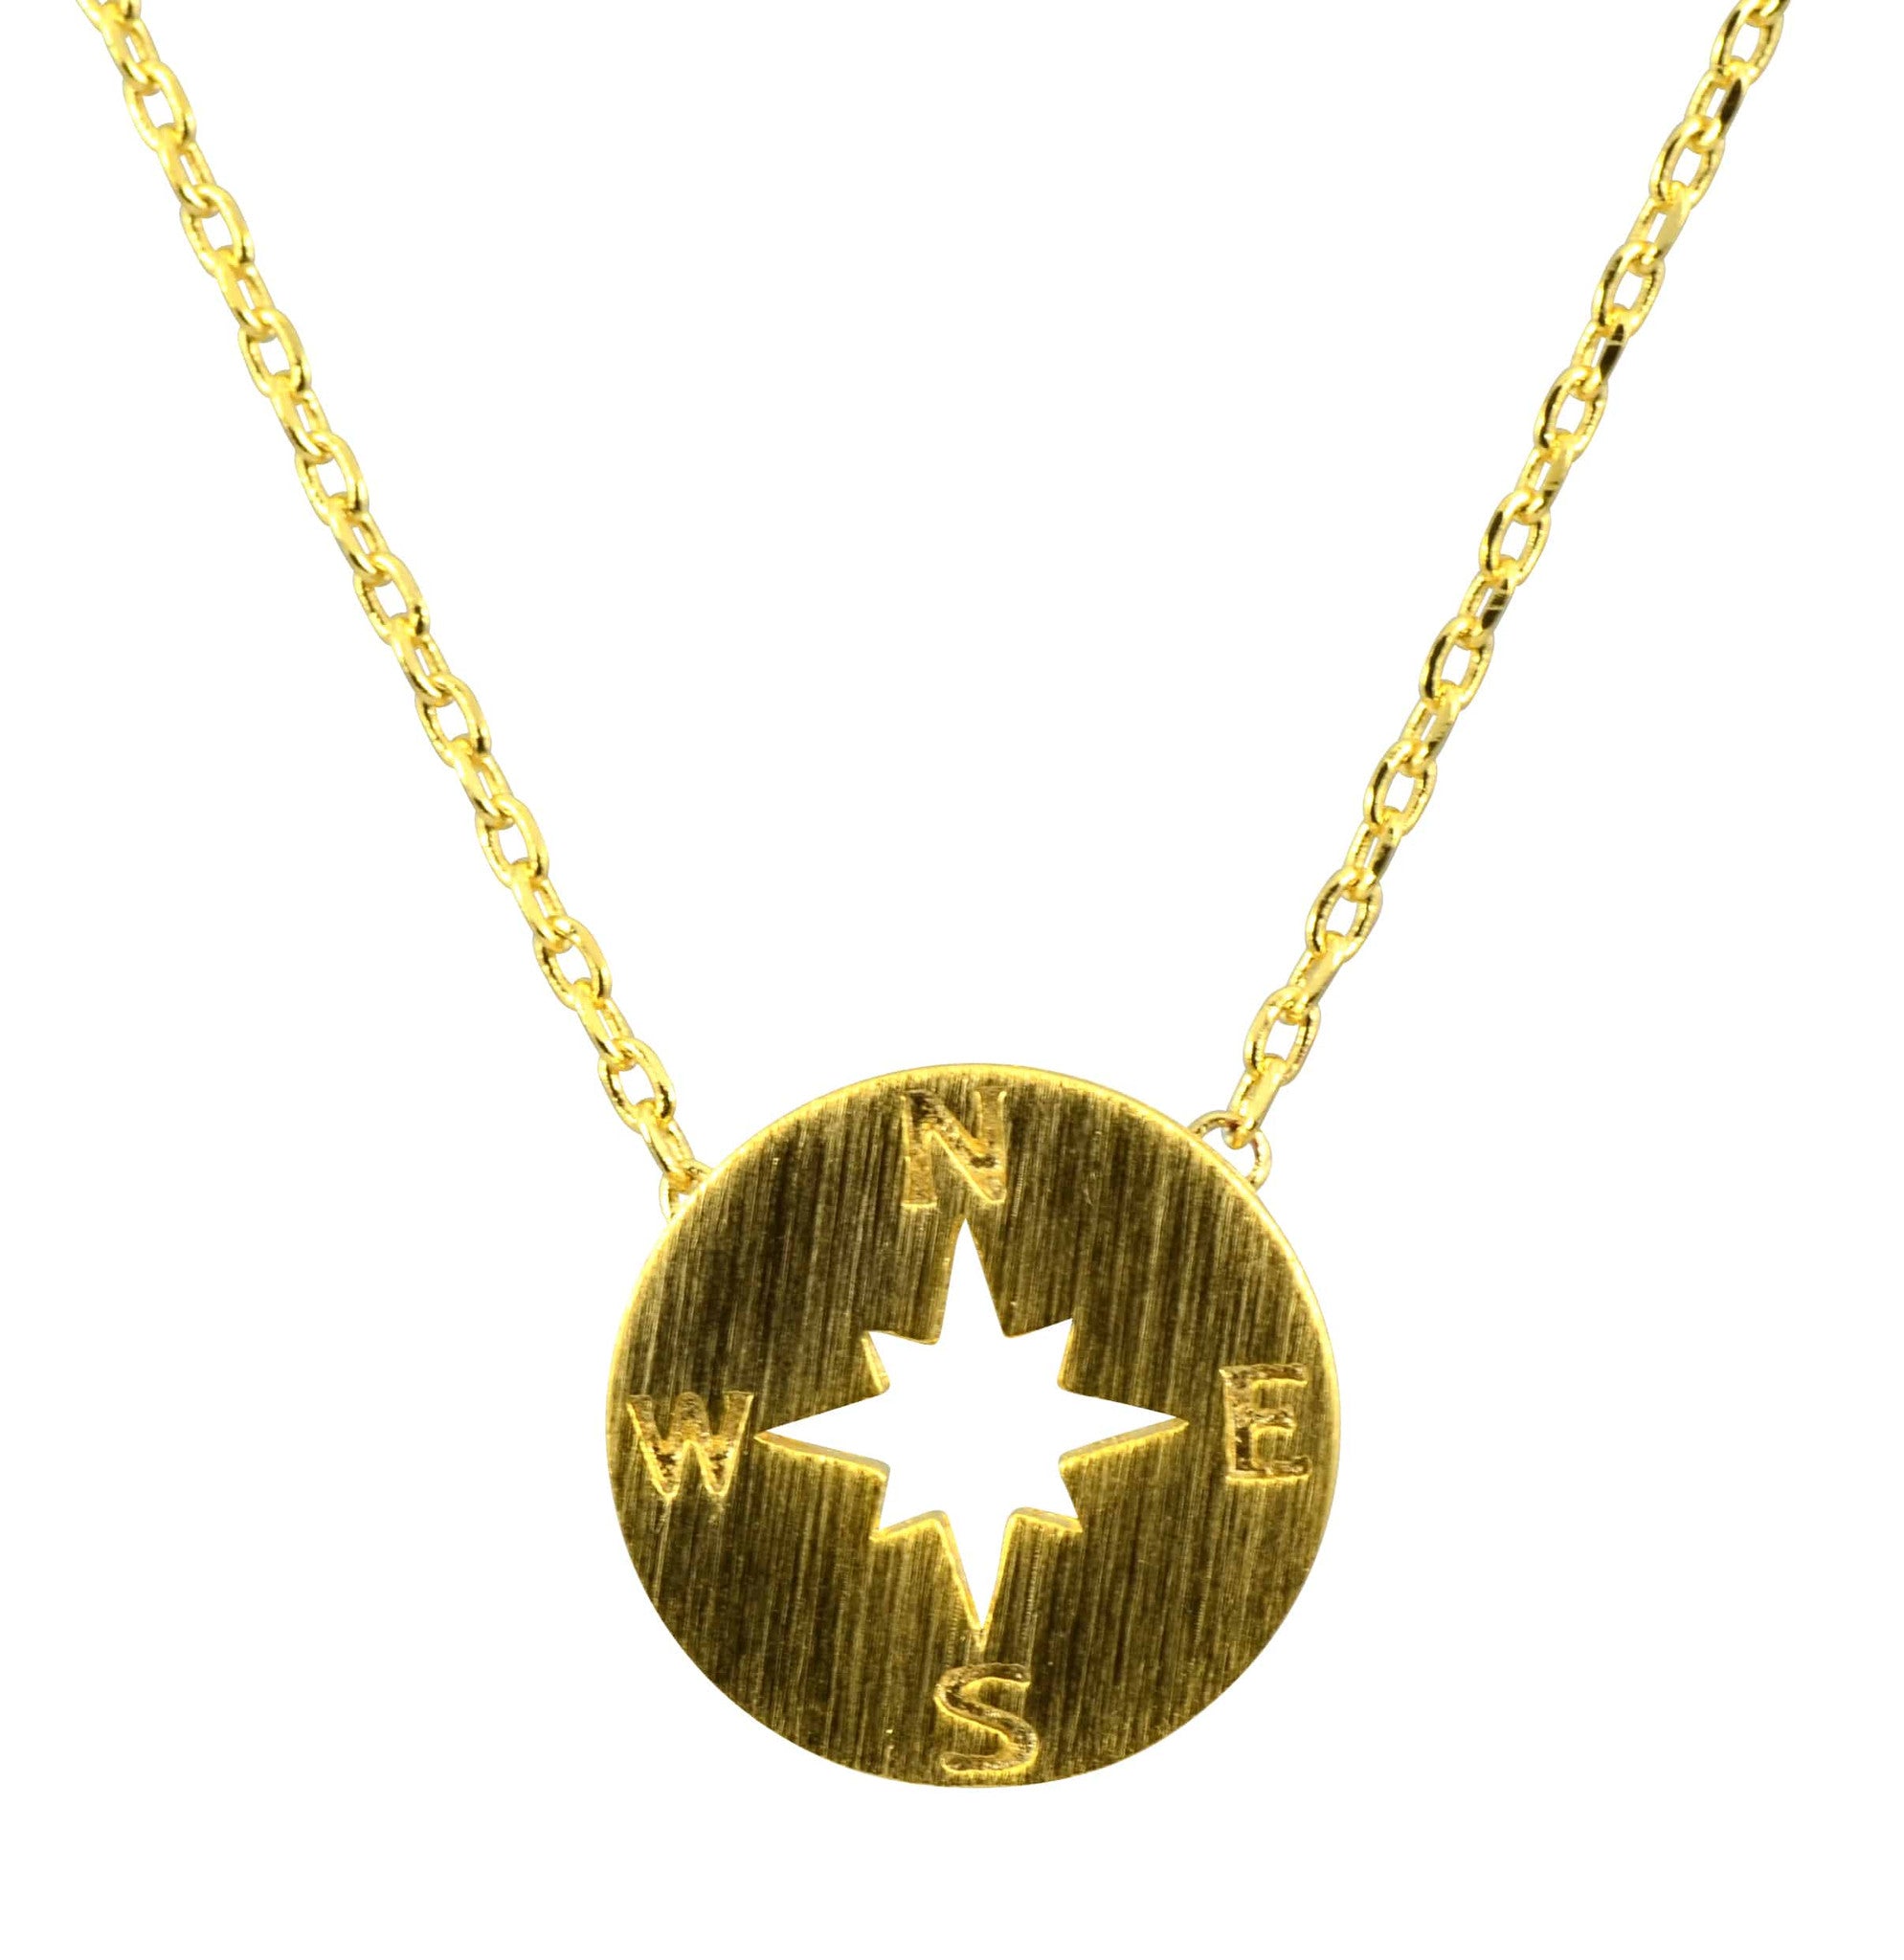 Enreverie Compass Necklace, Gold Plated Pendant